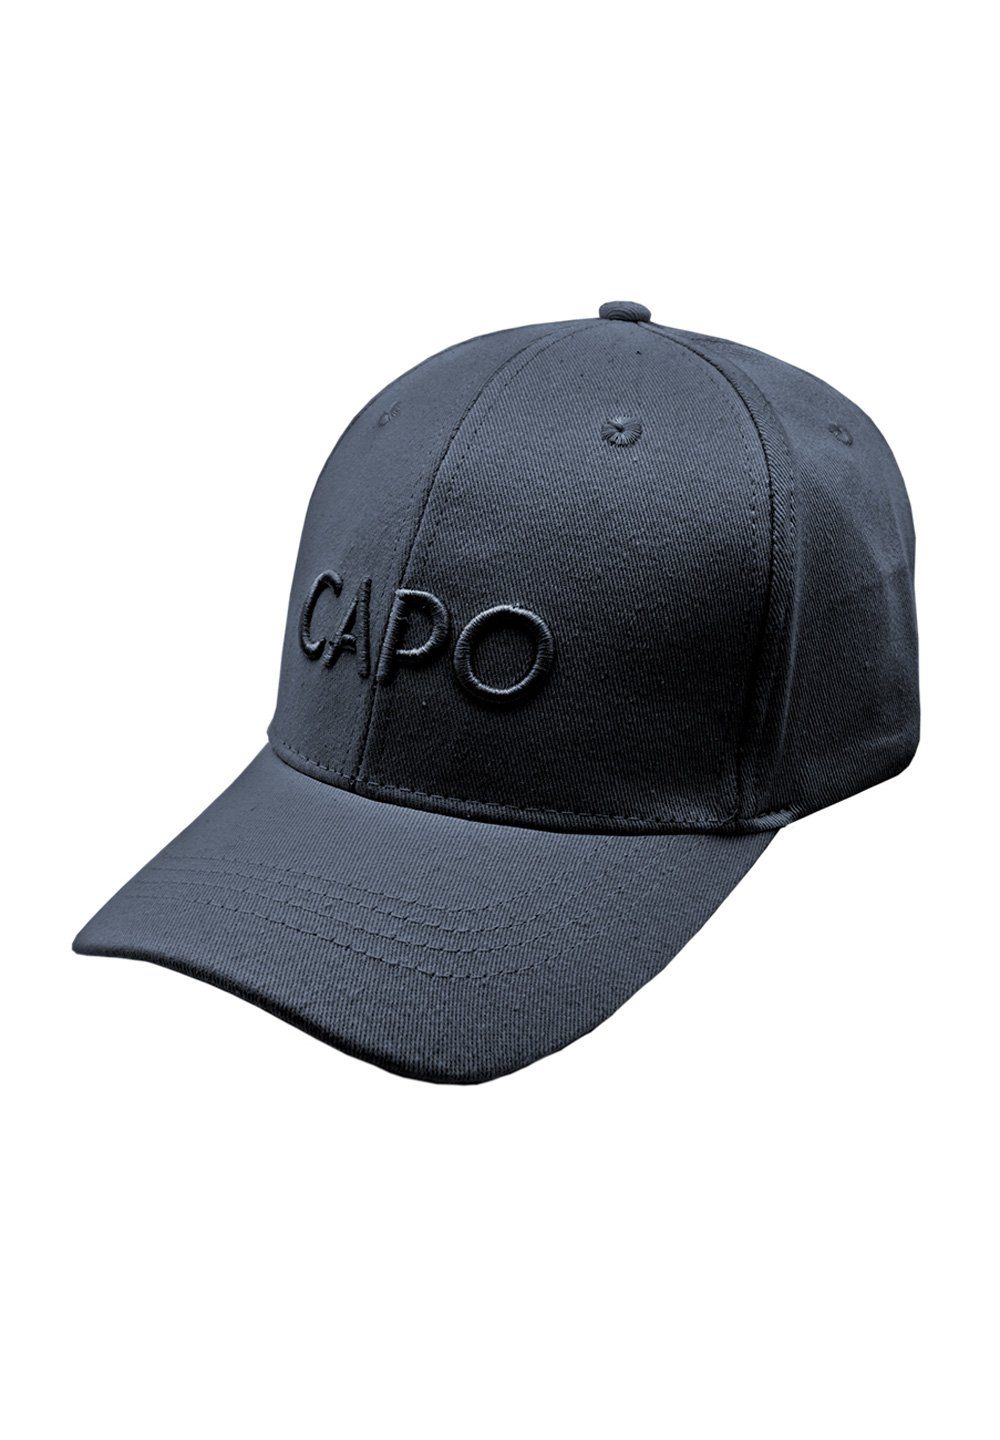 CAPO Baseball Cap Baseballcap 3D-Stickerei, 6 Panel navy | Baseball Caps